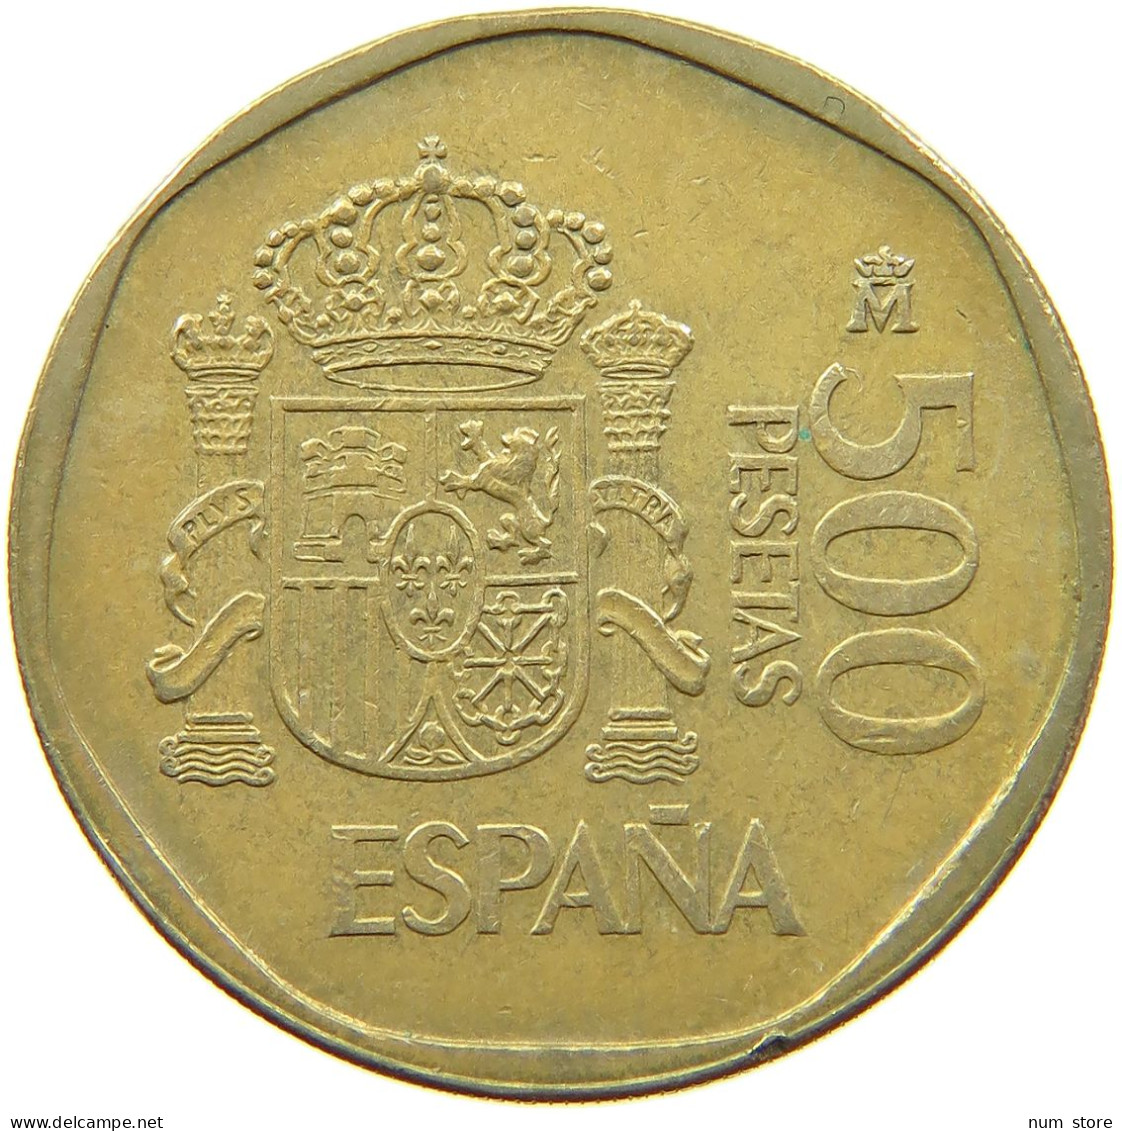 SPAIN 500 PESETAS 1989 #a033 0817 - 500 Peseta